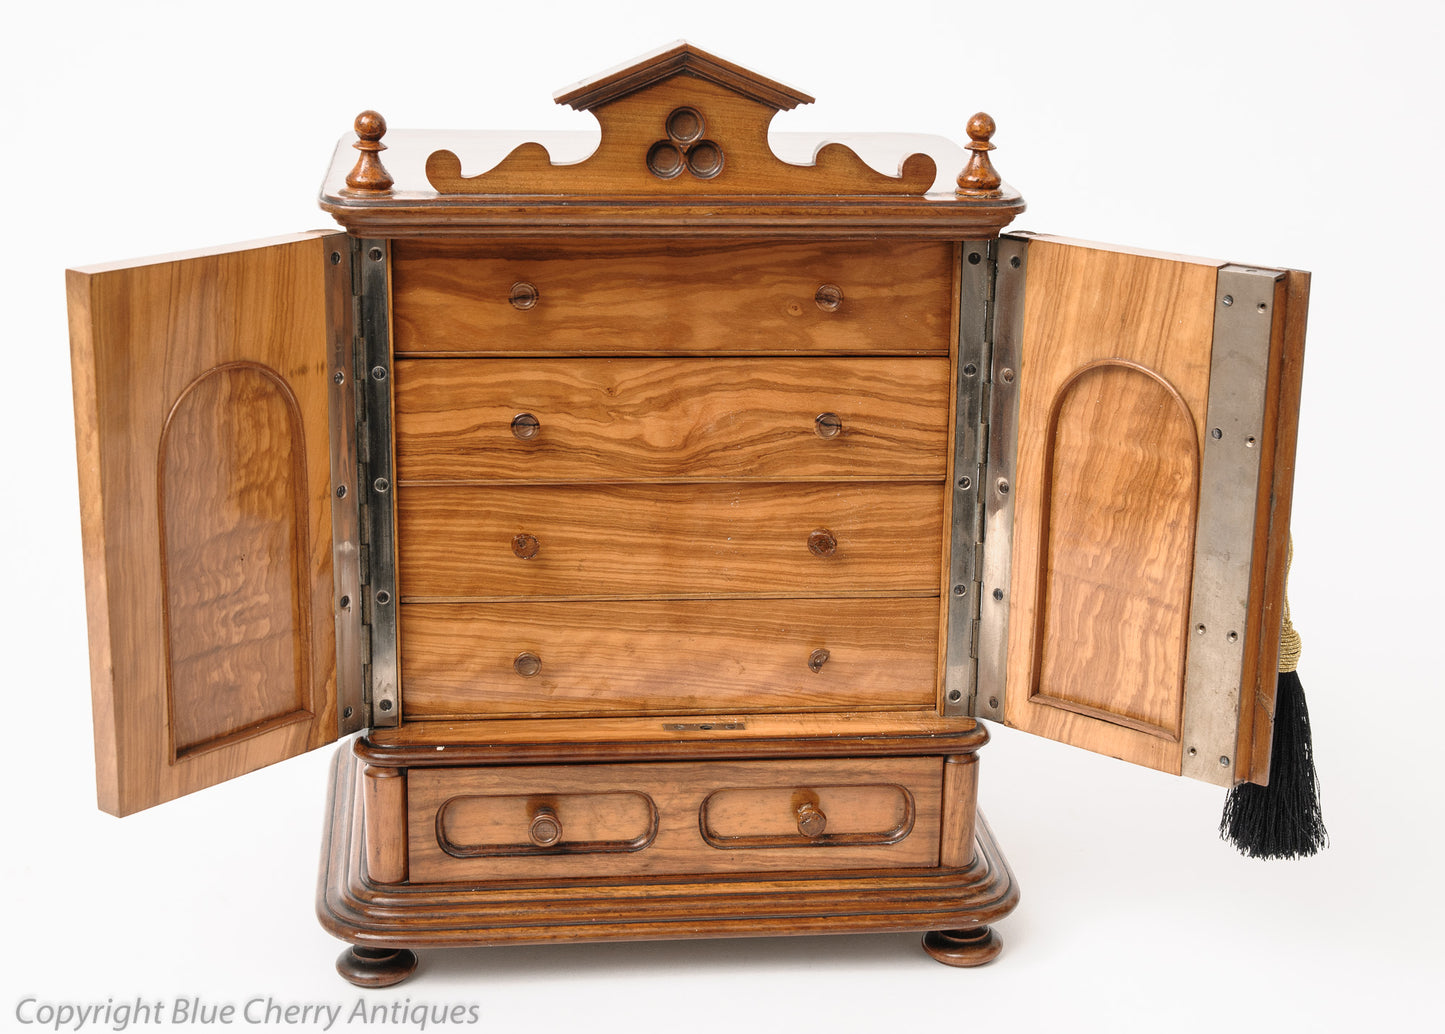 Antique Miniature Figured Walnut Armoire Table Top Cabinet / Jewellery Box (Code 1558)